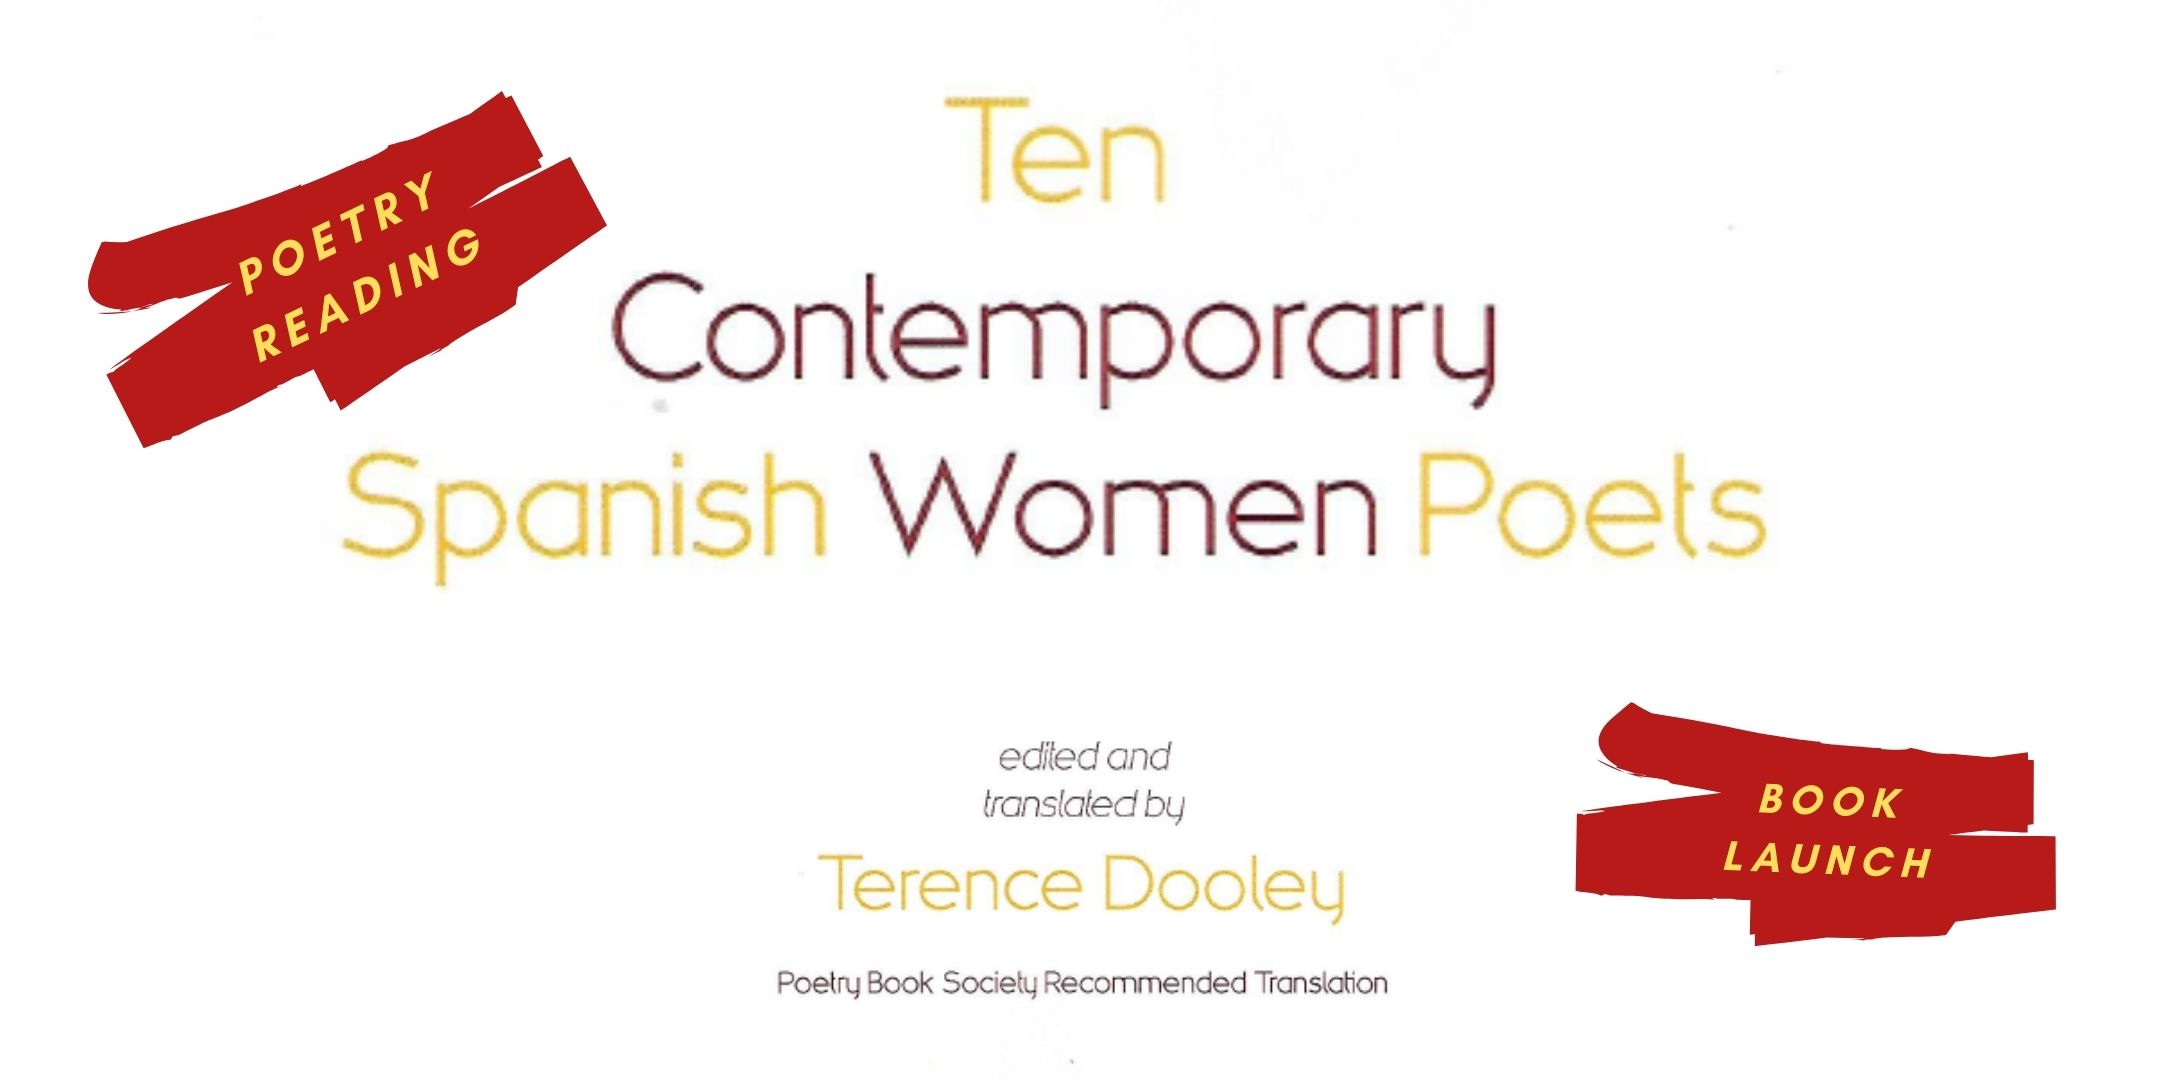 Diez poetas españolas contemporáneas